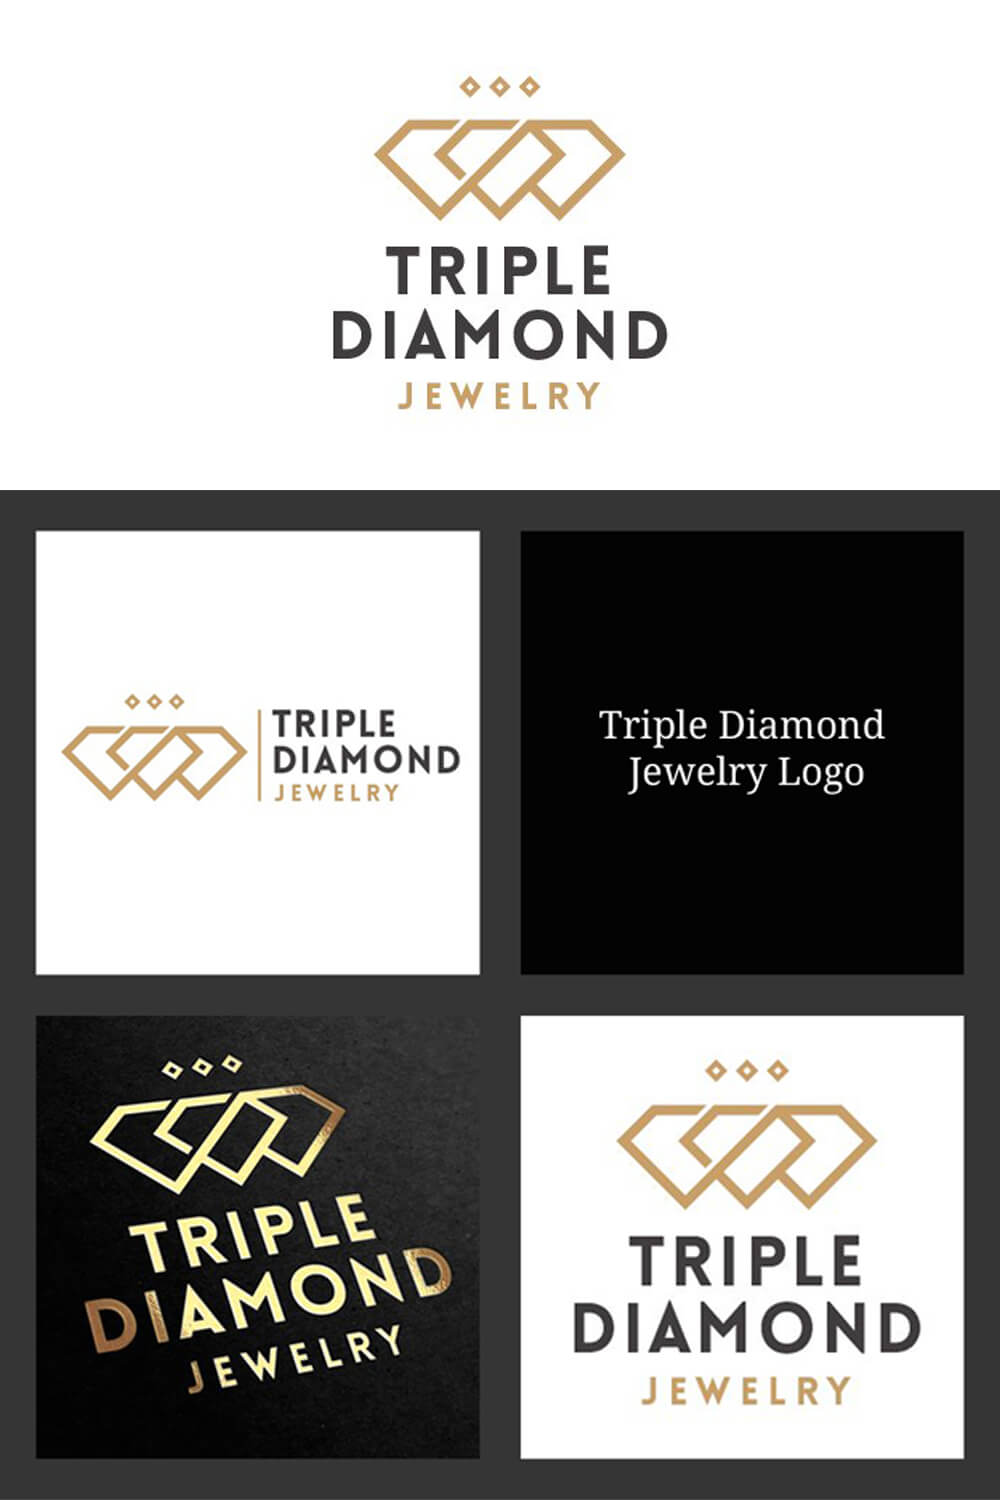 Five gold colored triple diamond jewelery logos.